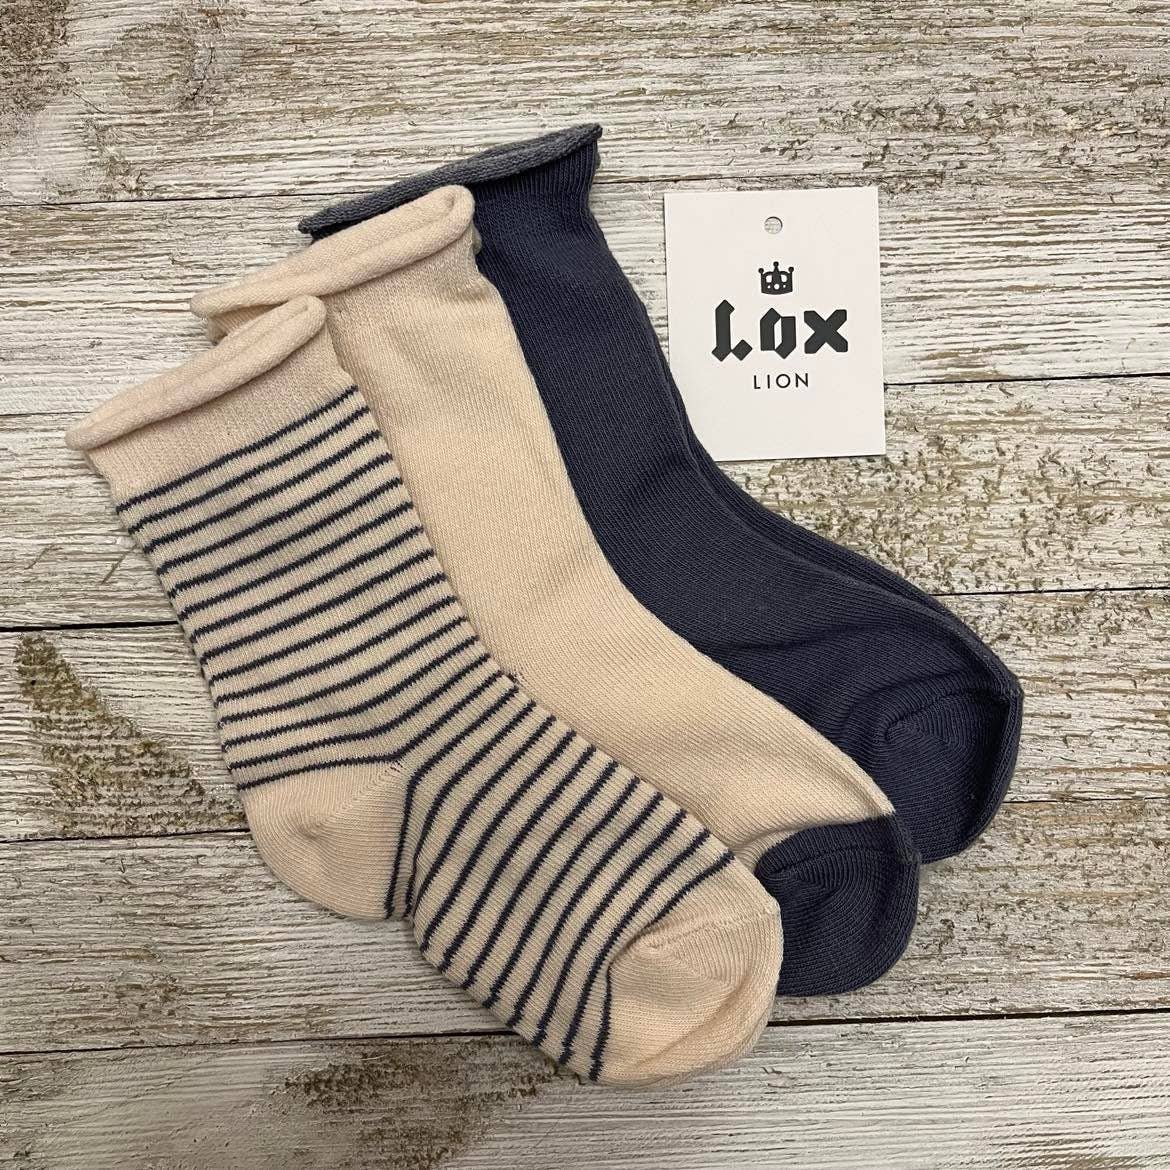 Lox Lion Organic cotton toddler socks - 3 pack